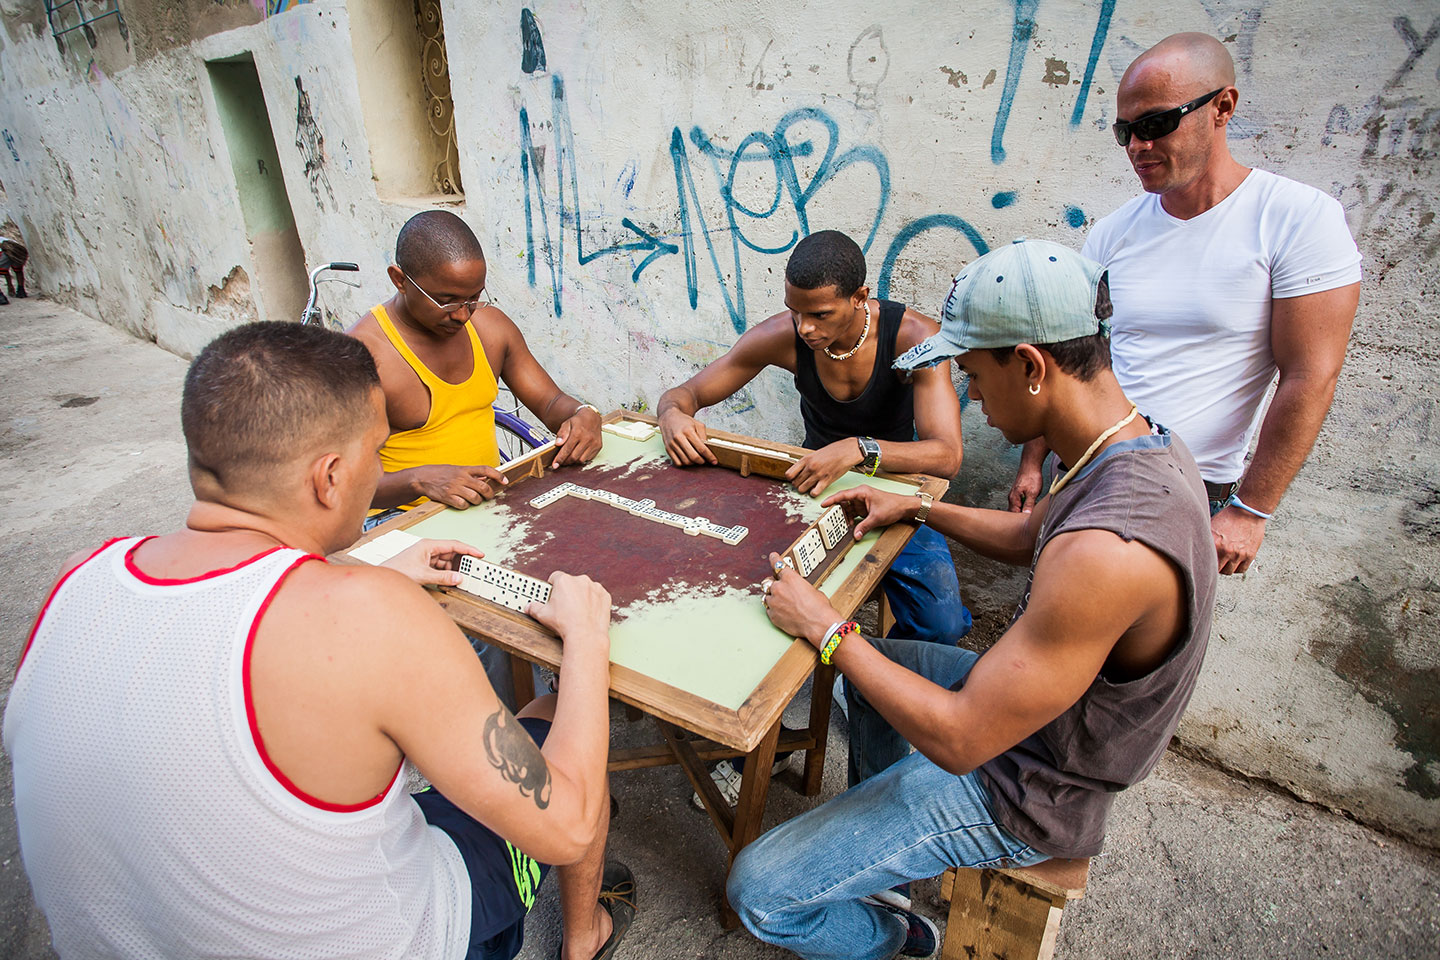 Men playing dominos in the streets of Havana, Cuba